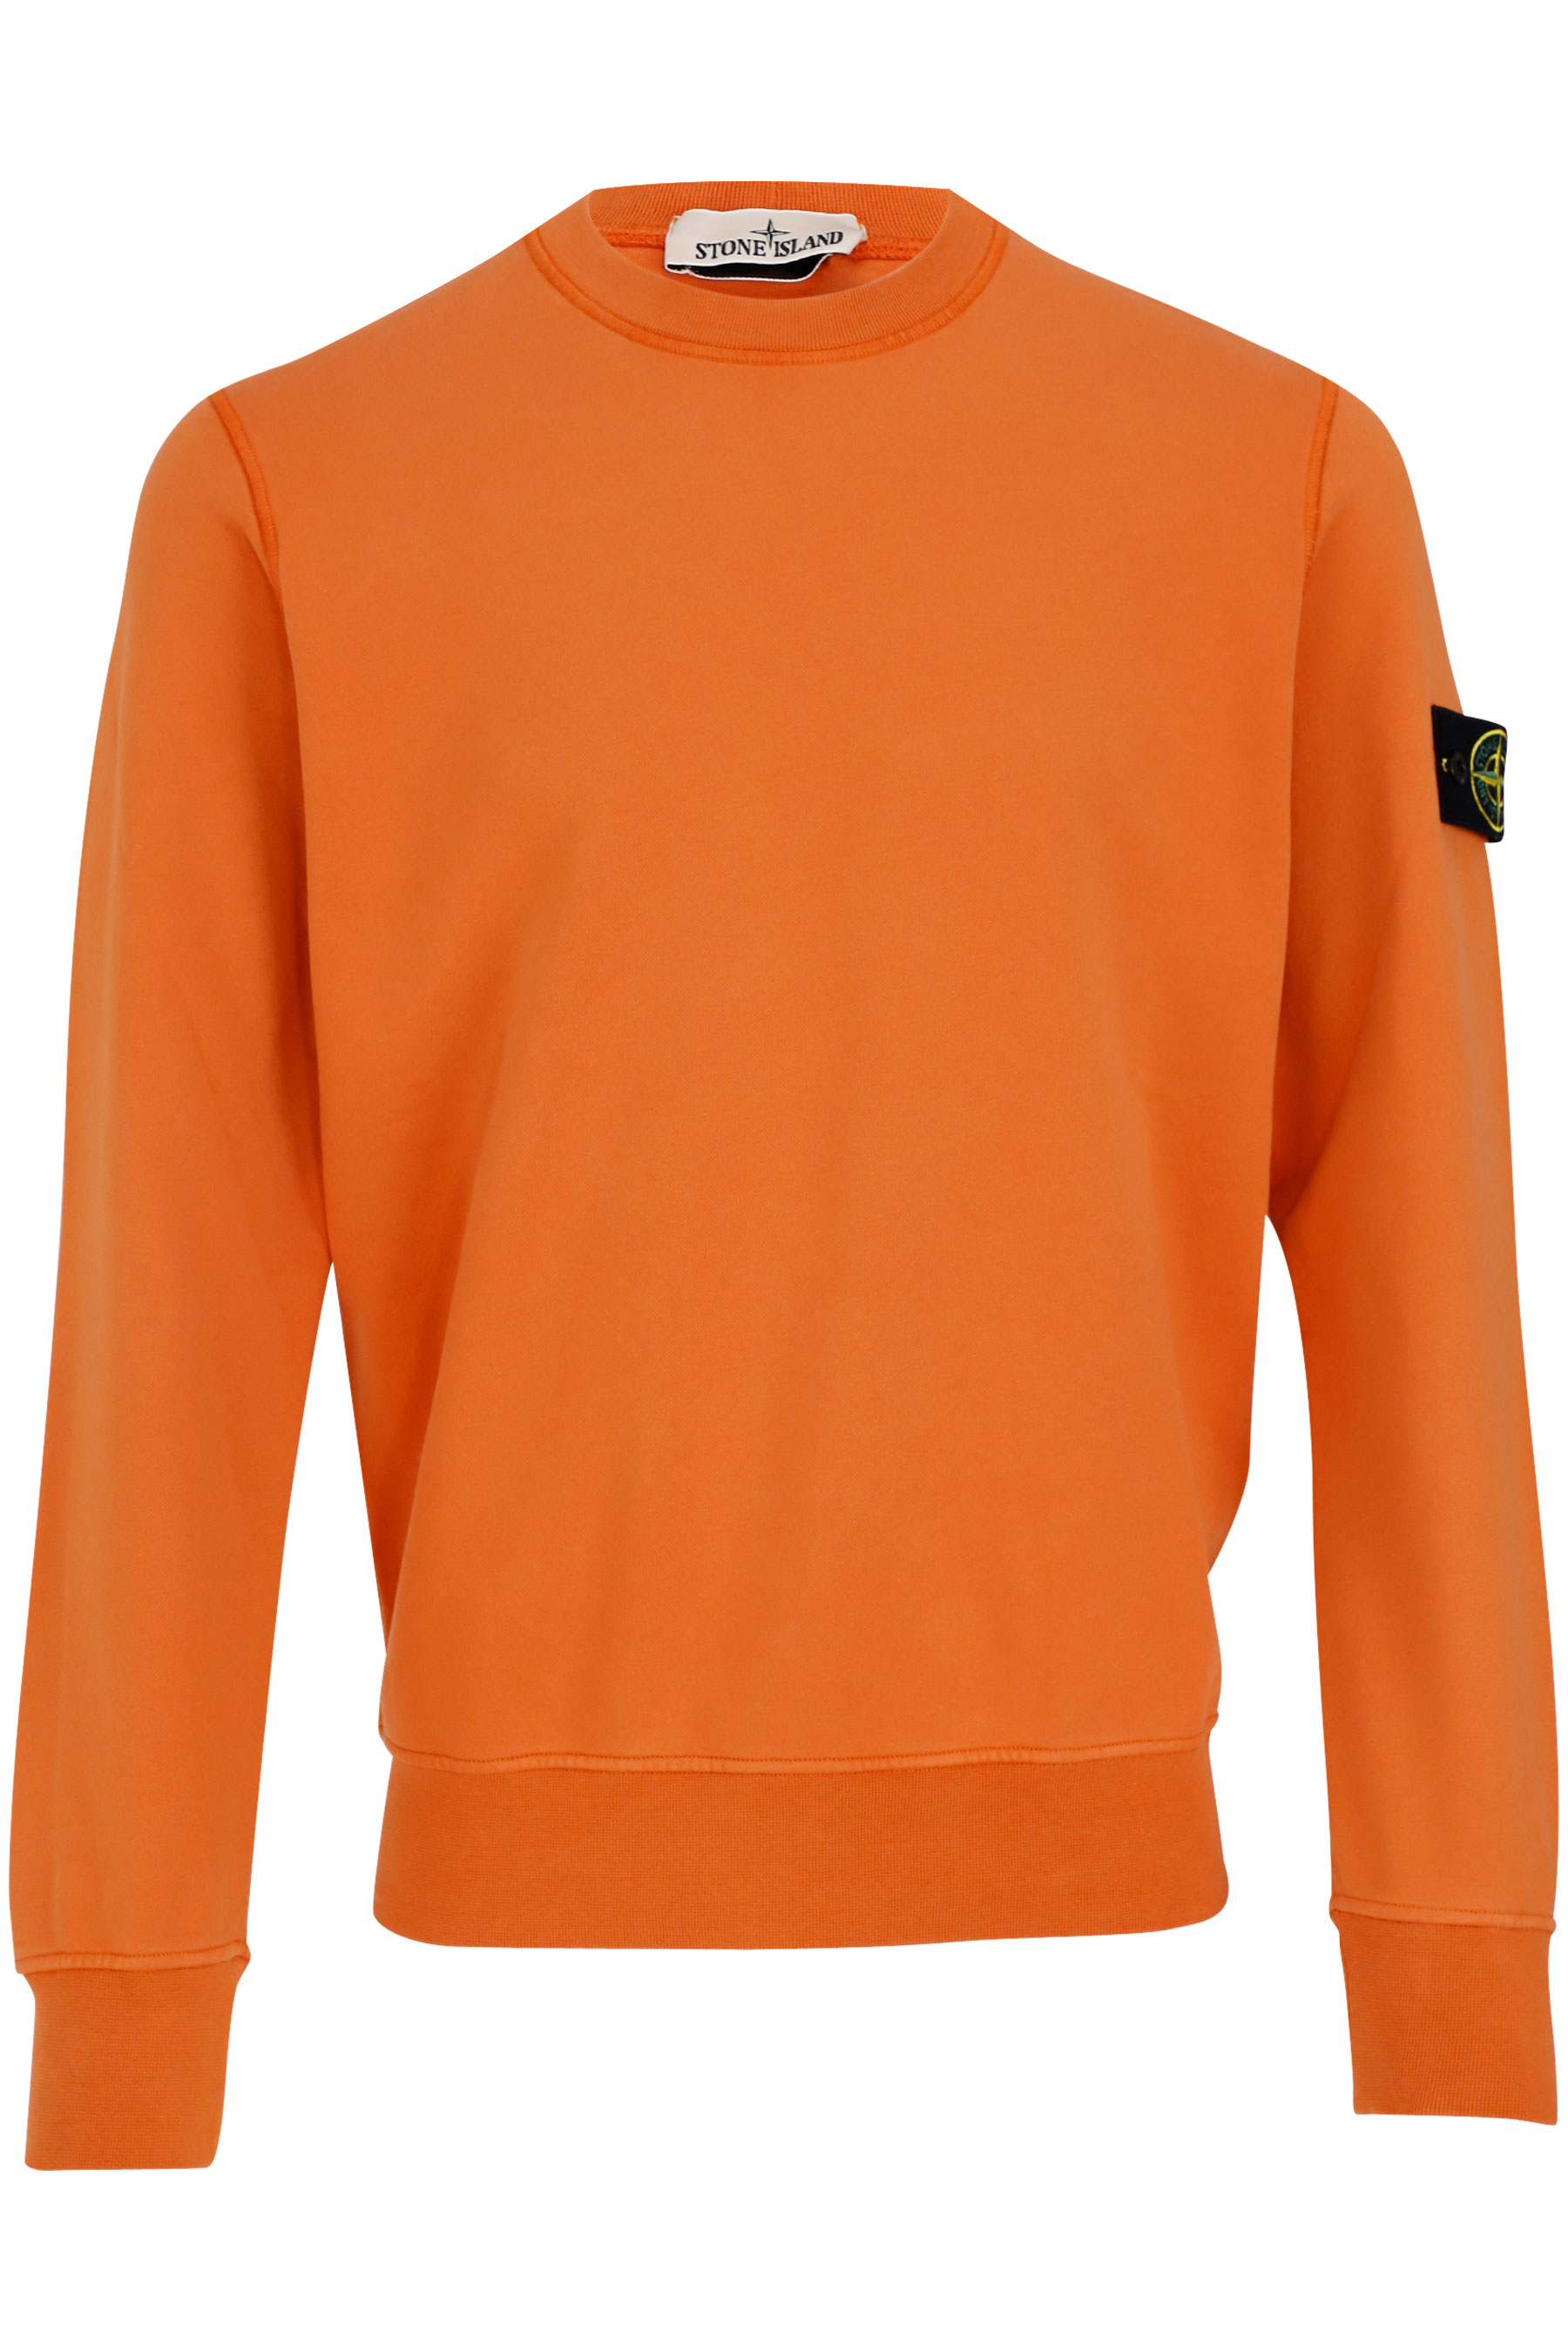 Stone Island 1015 herenmode knitwear oranje | LeurinK mode